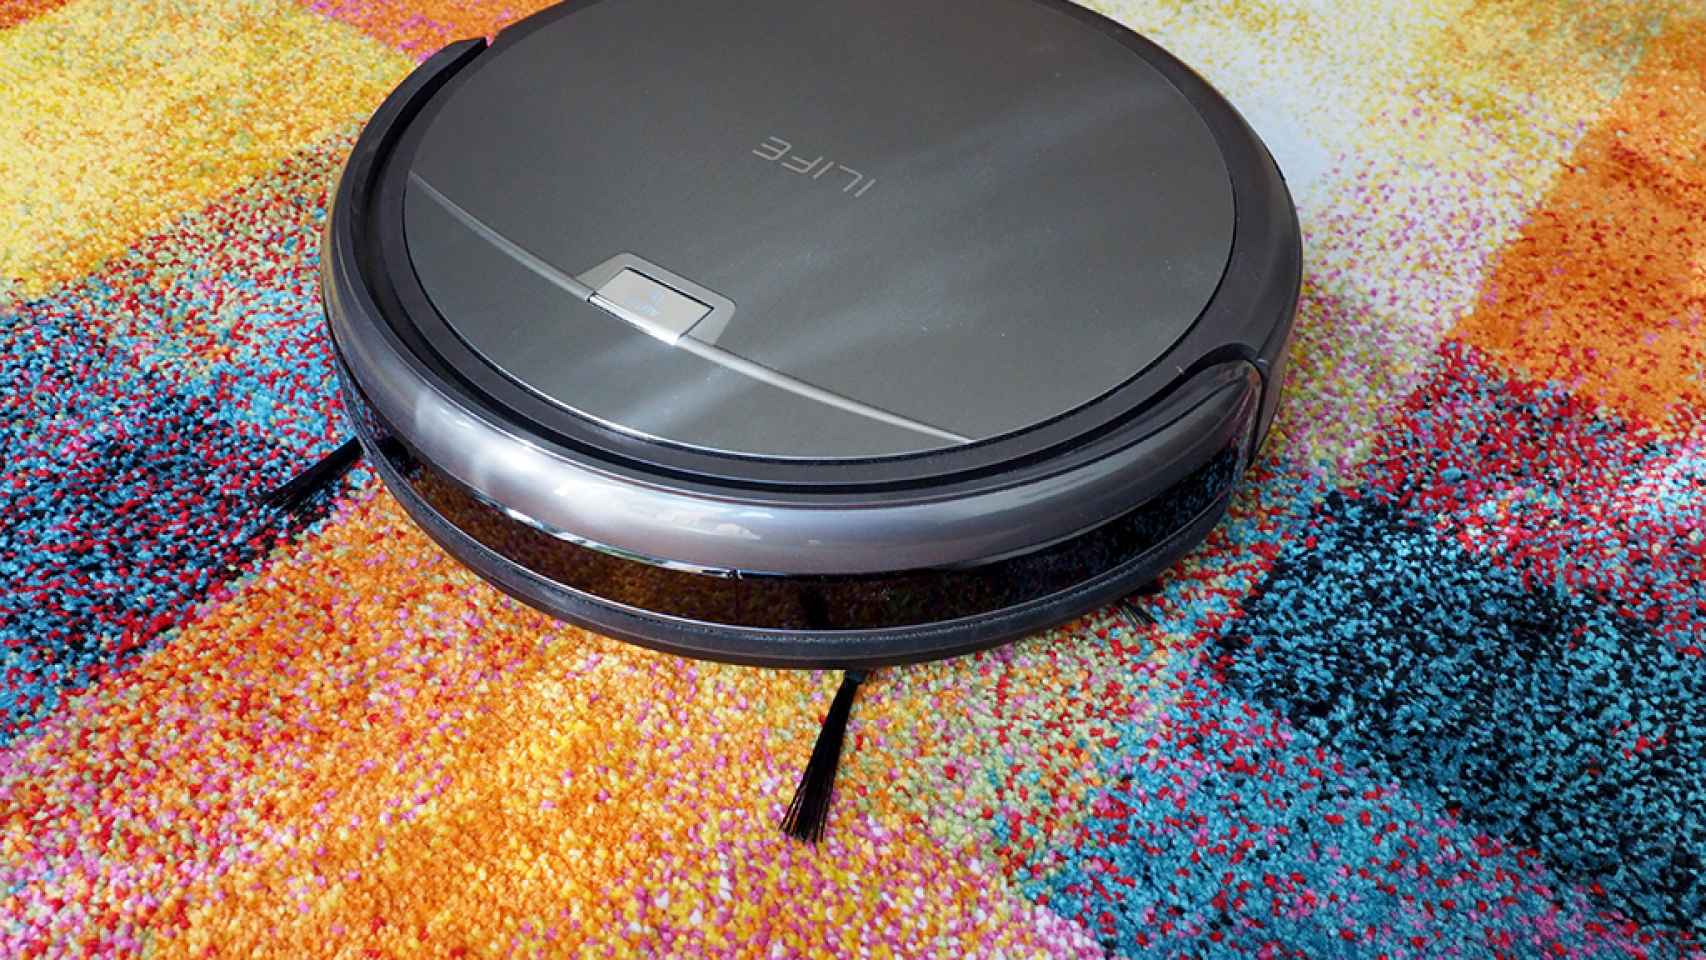 Chuwi ILIFE, probamos la alternativa barata a la Roomba